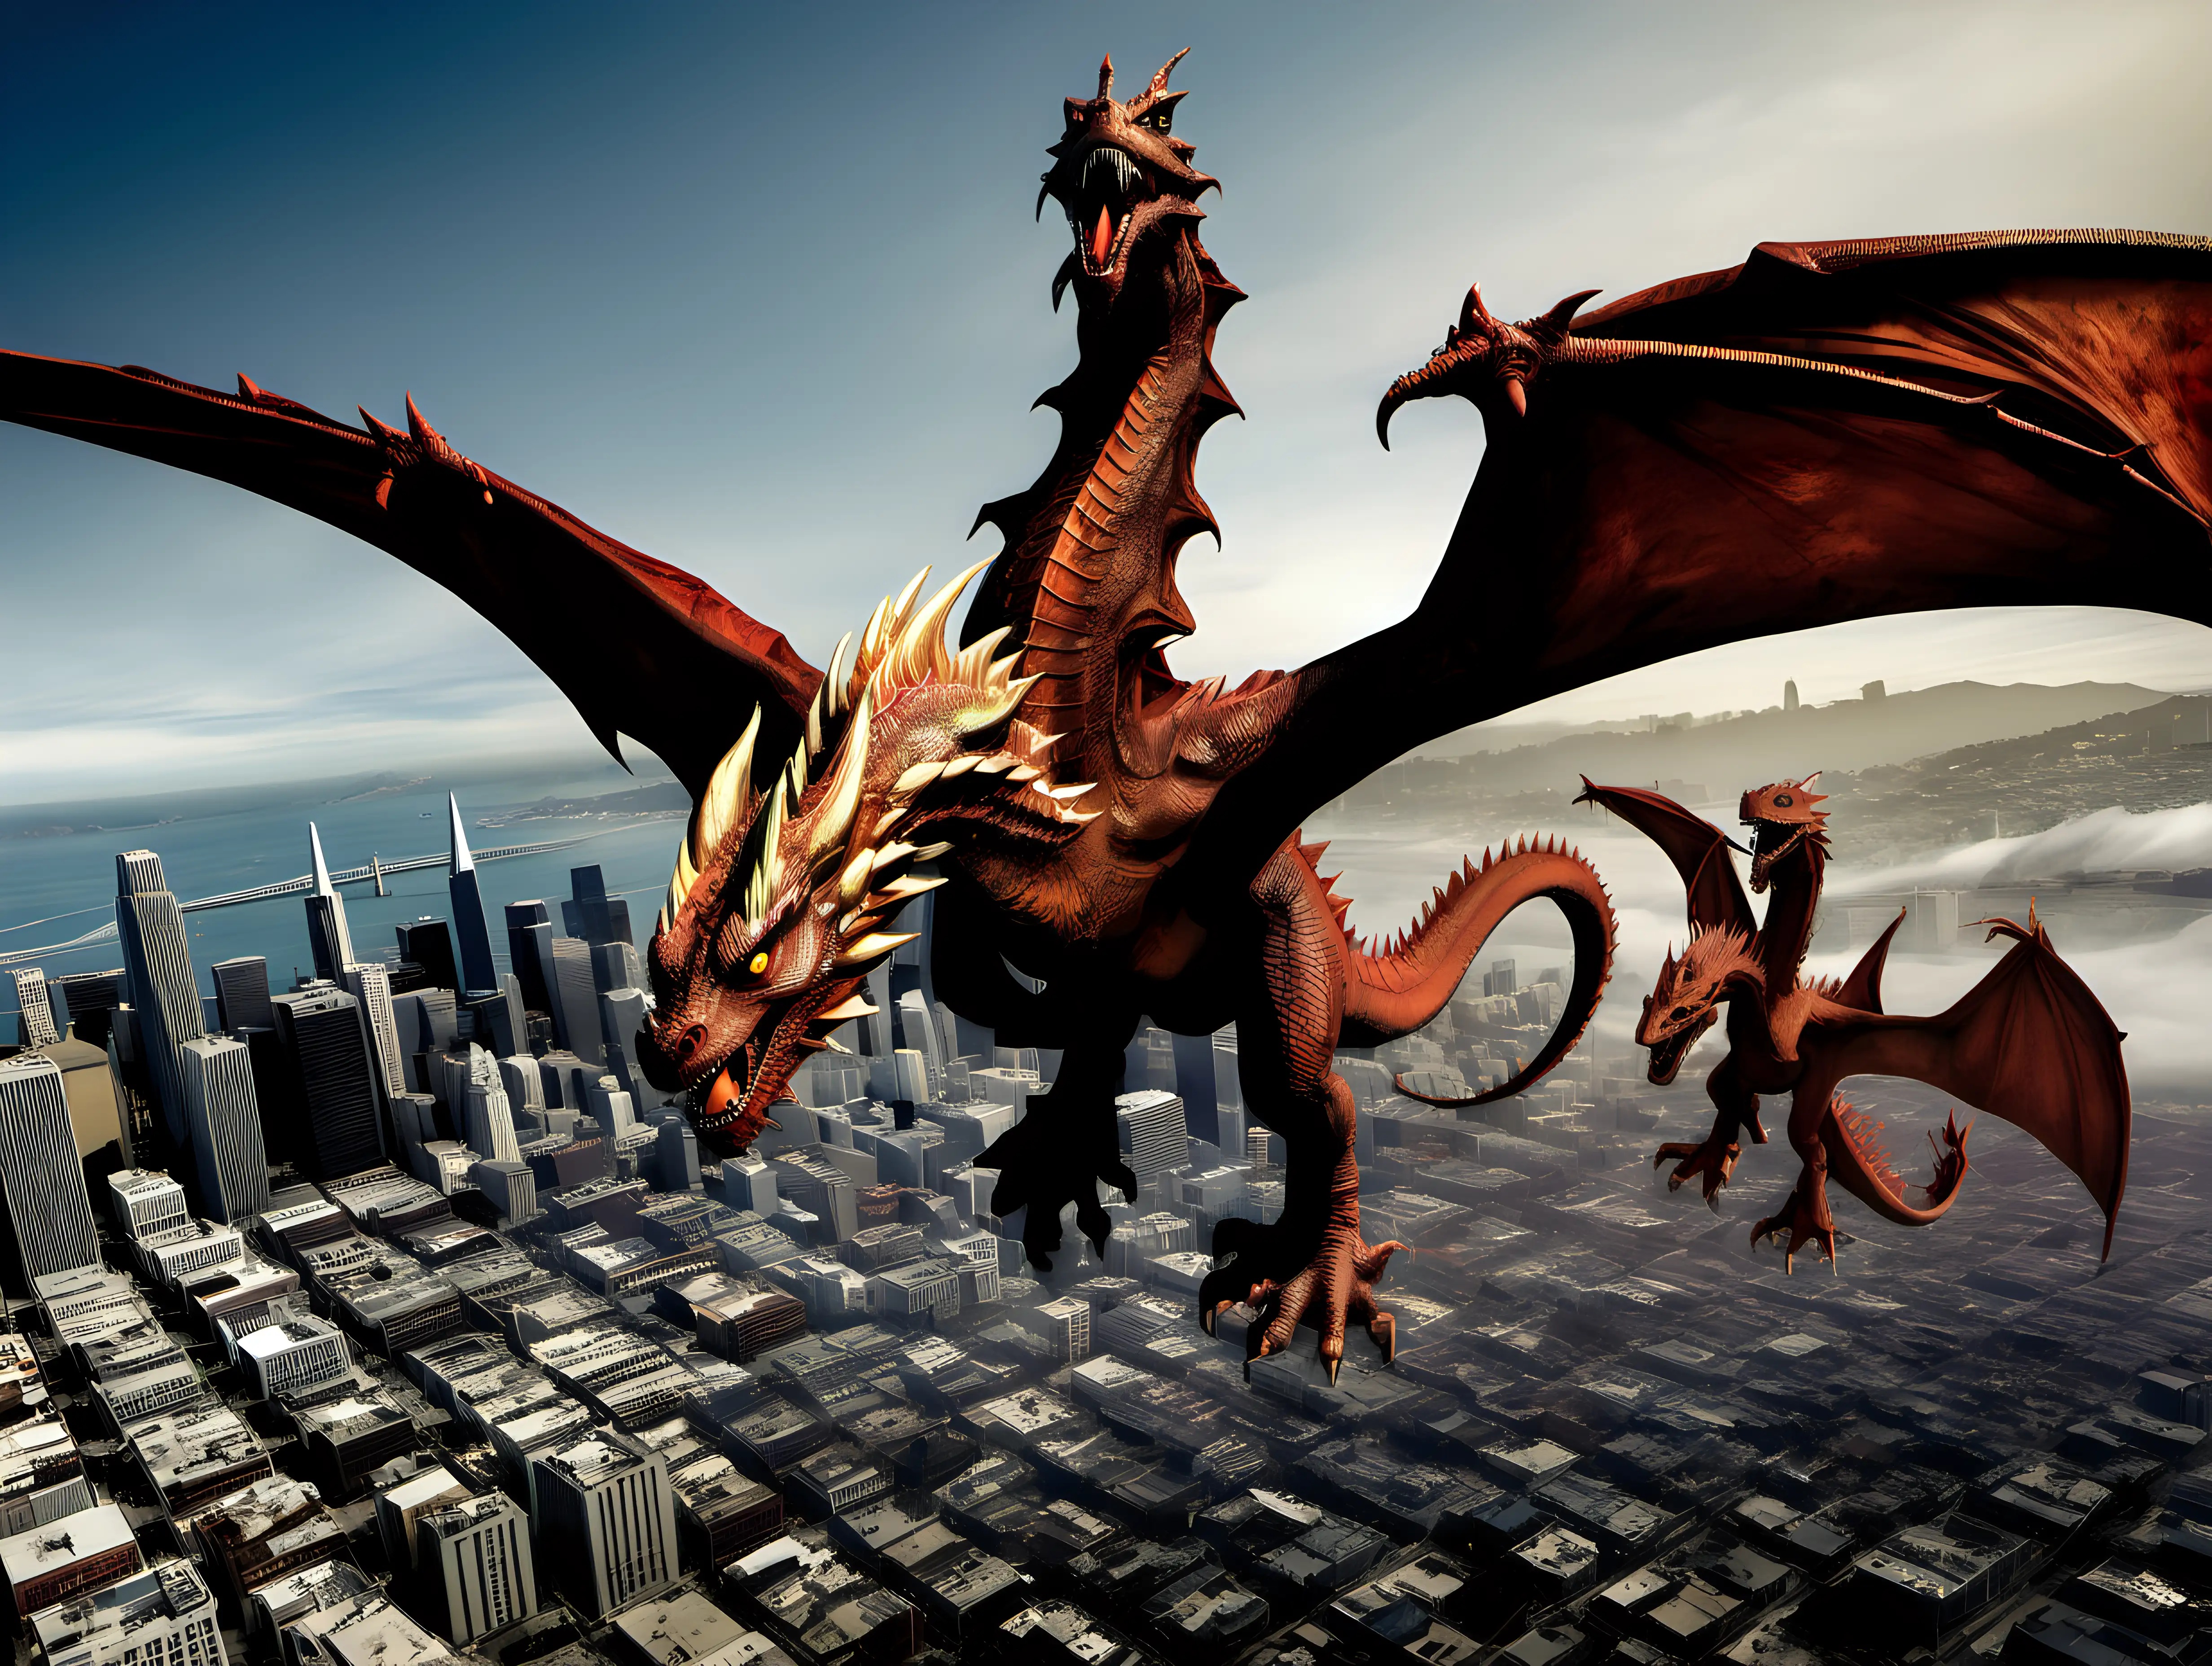 Majestic Dragons Descend on San Francisco A Breathtaking Age of Wonder